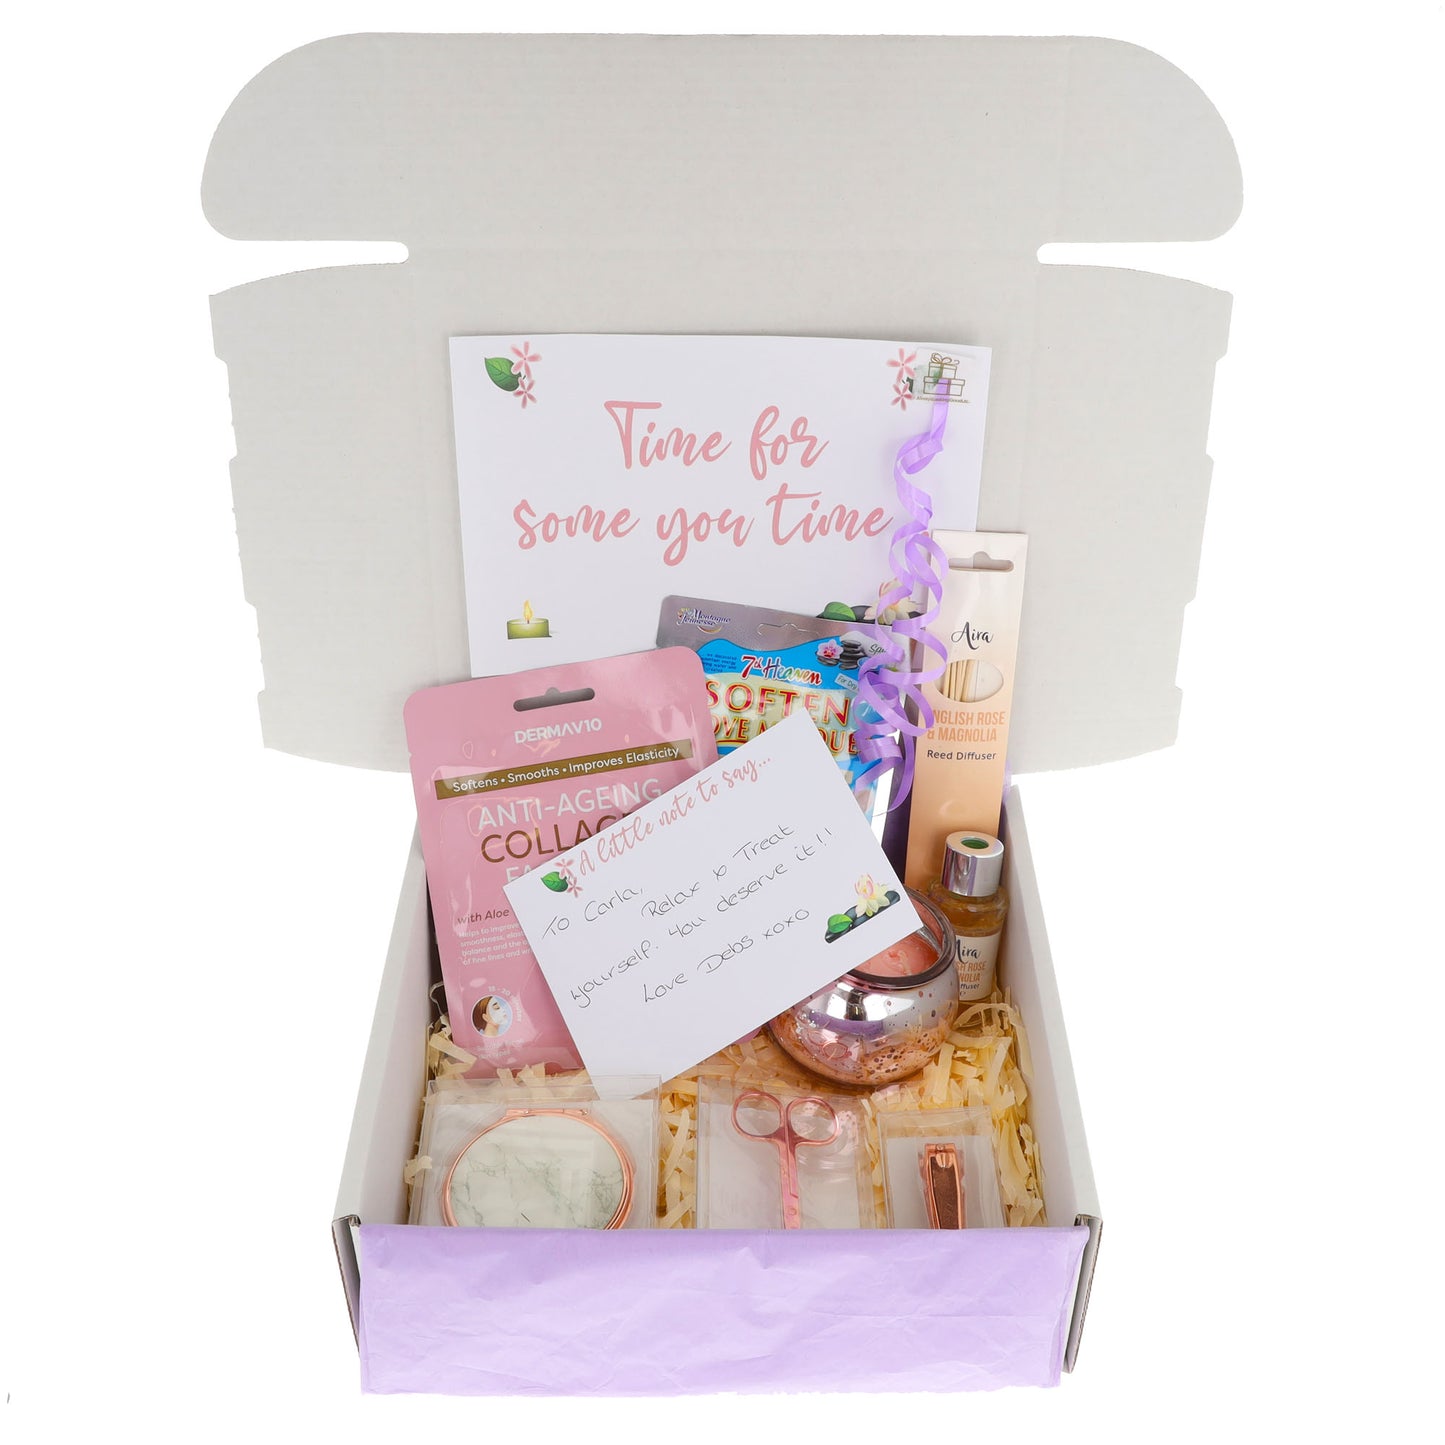 Personalised Spa at Home Hamper Pamper Gift Box  - Always Looking Good -   